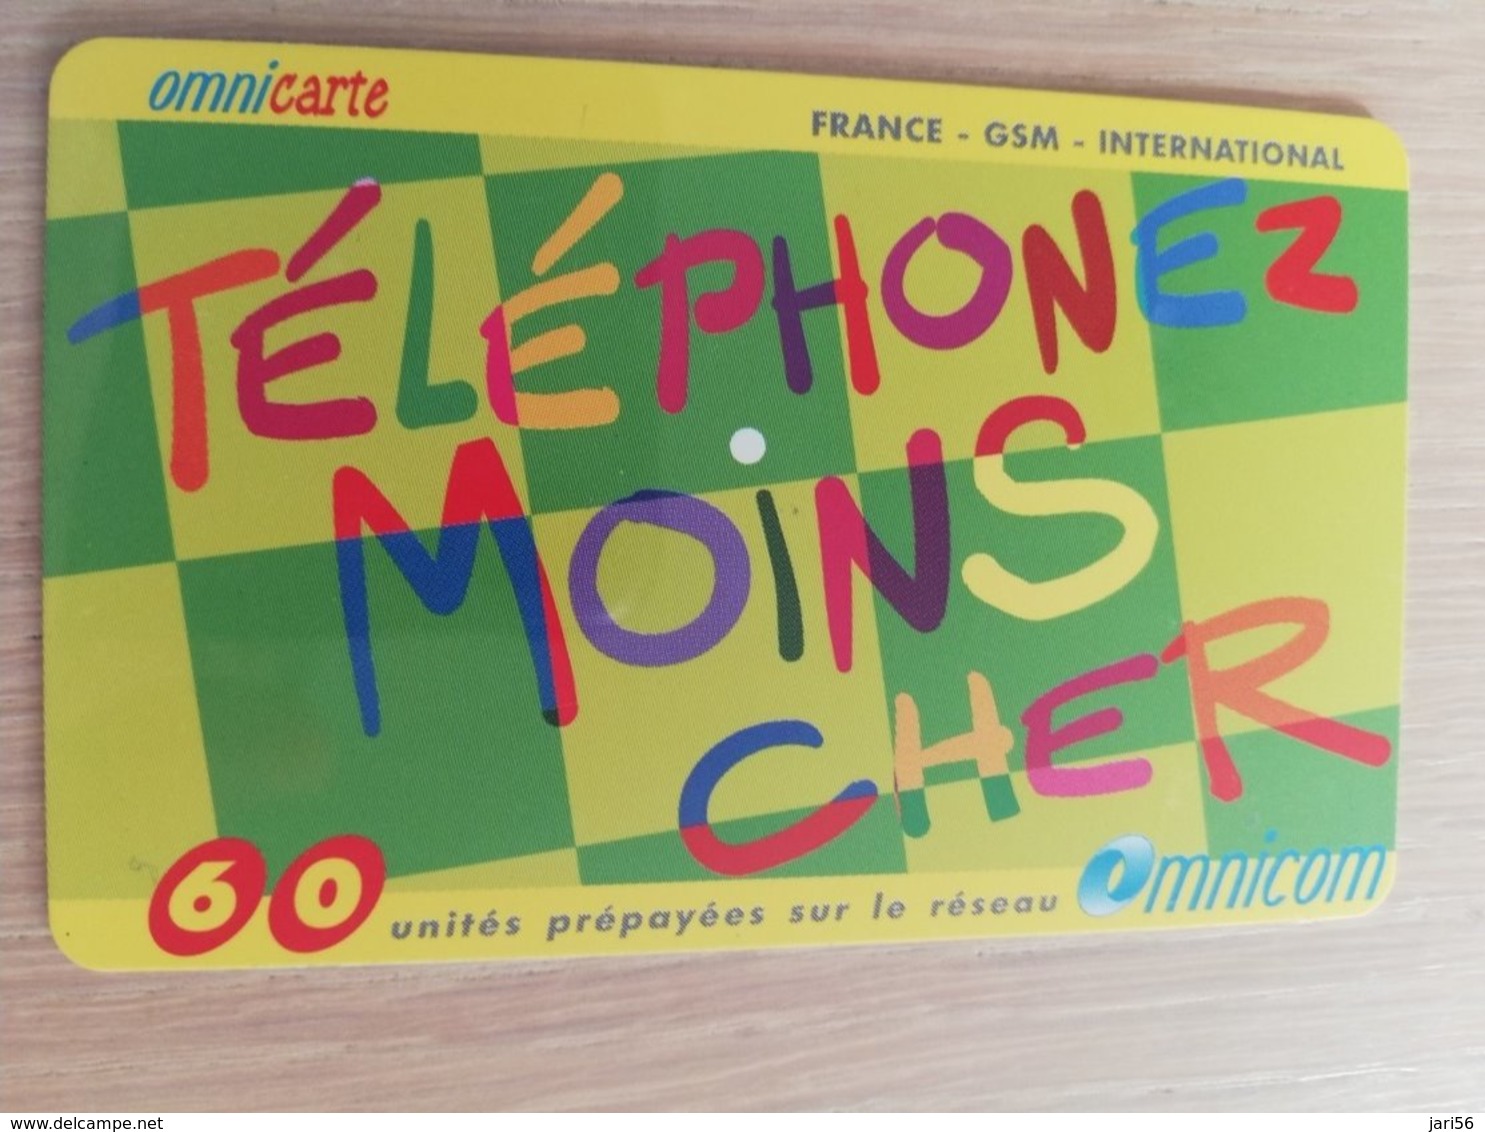 FRANCE/FRANKRIJK  OMNICARTE TELEPHONE MOINS CHER 60 UNITS PREPAID  USED    ** 1510** - Nachladekarten (Handy/SIM)